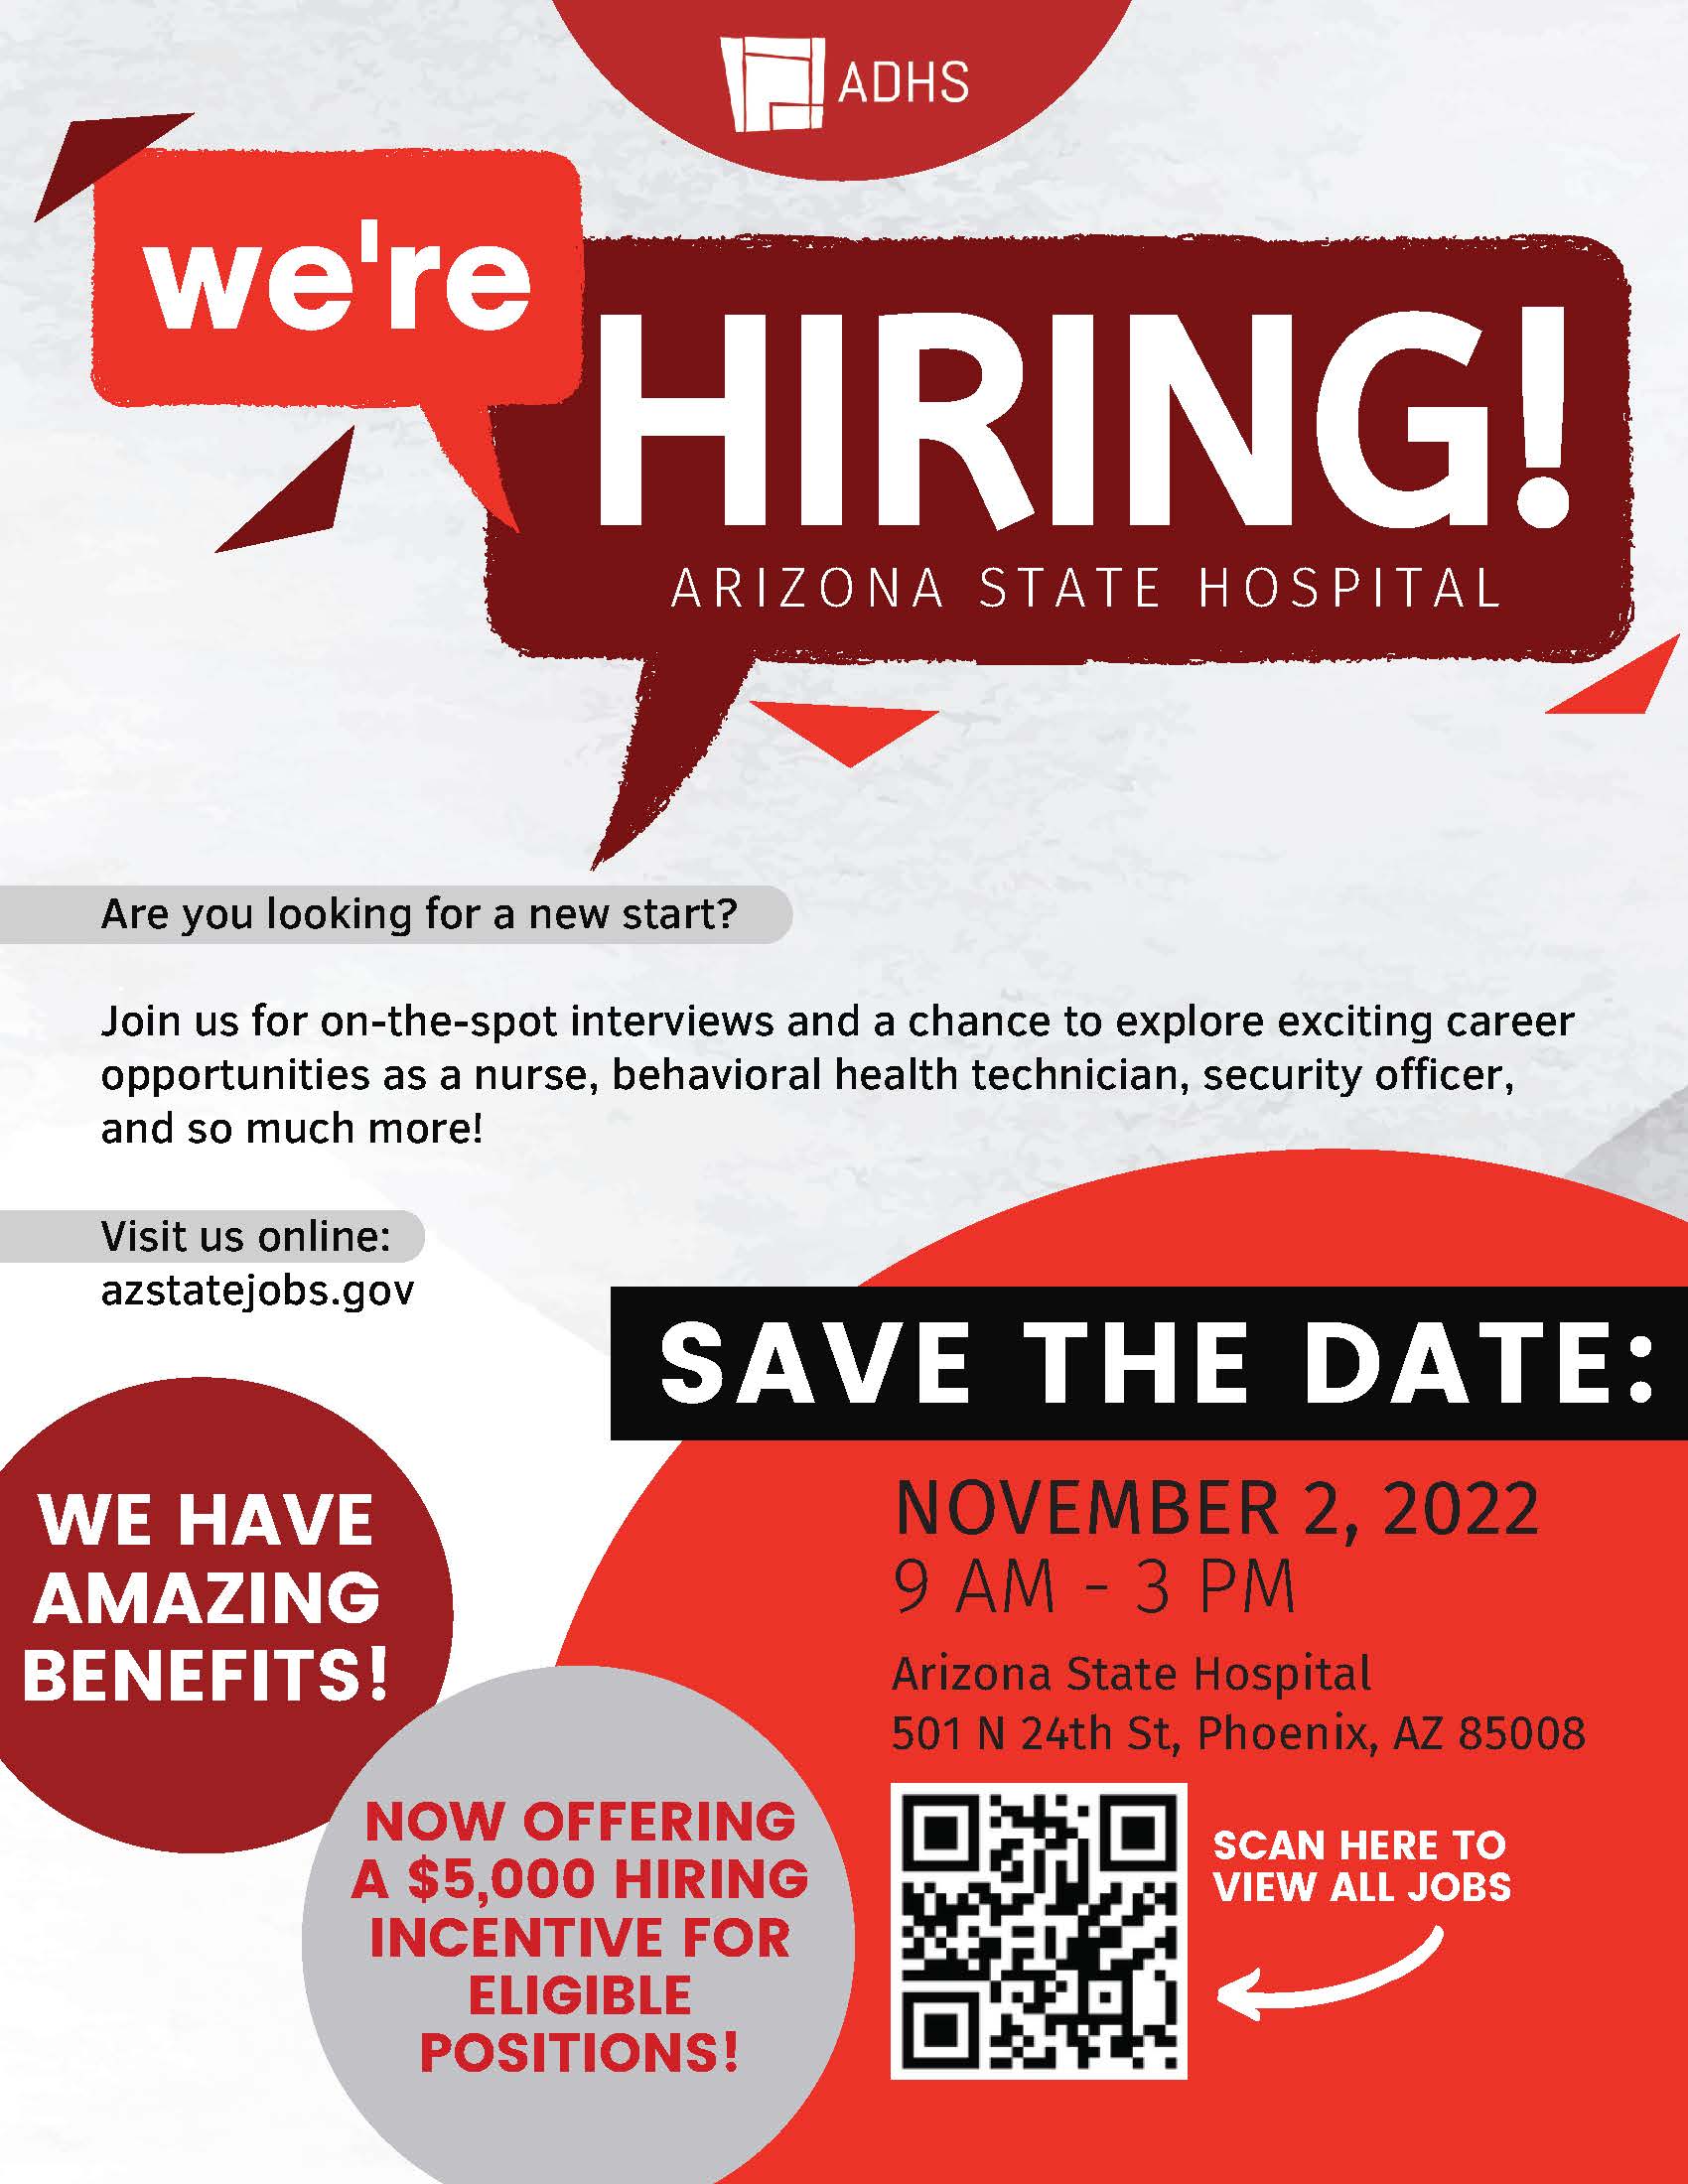 Arizona State Hospital Hiring event 11-2-2022